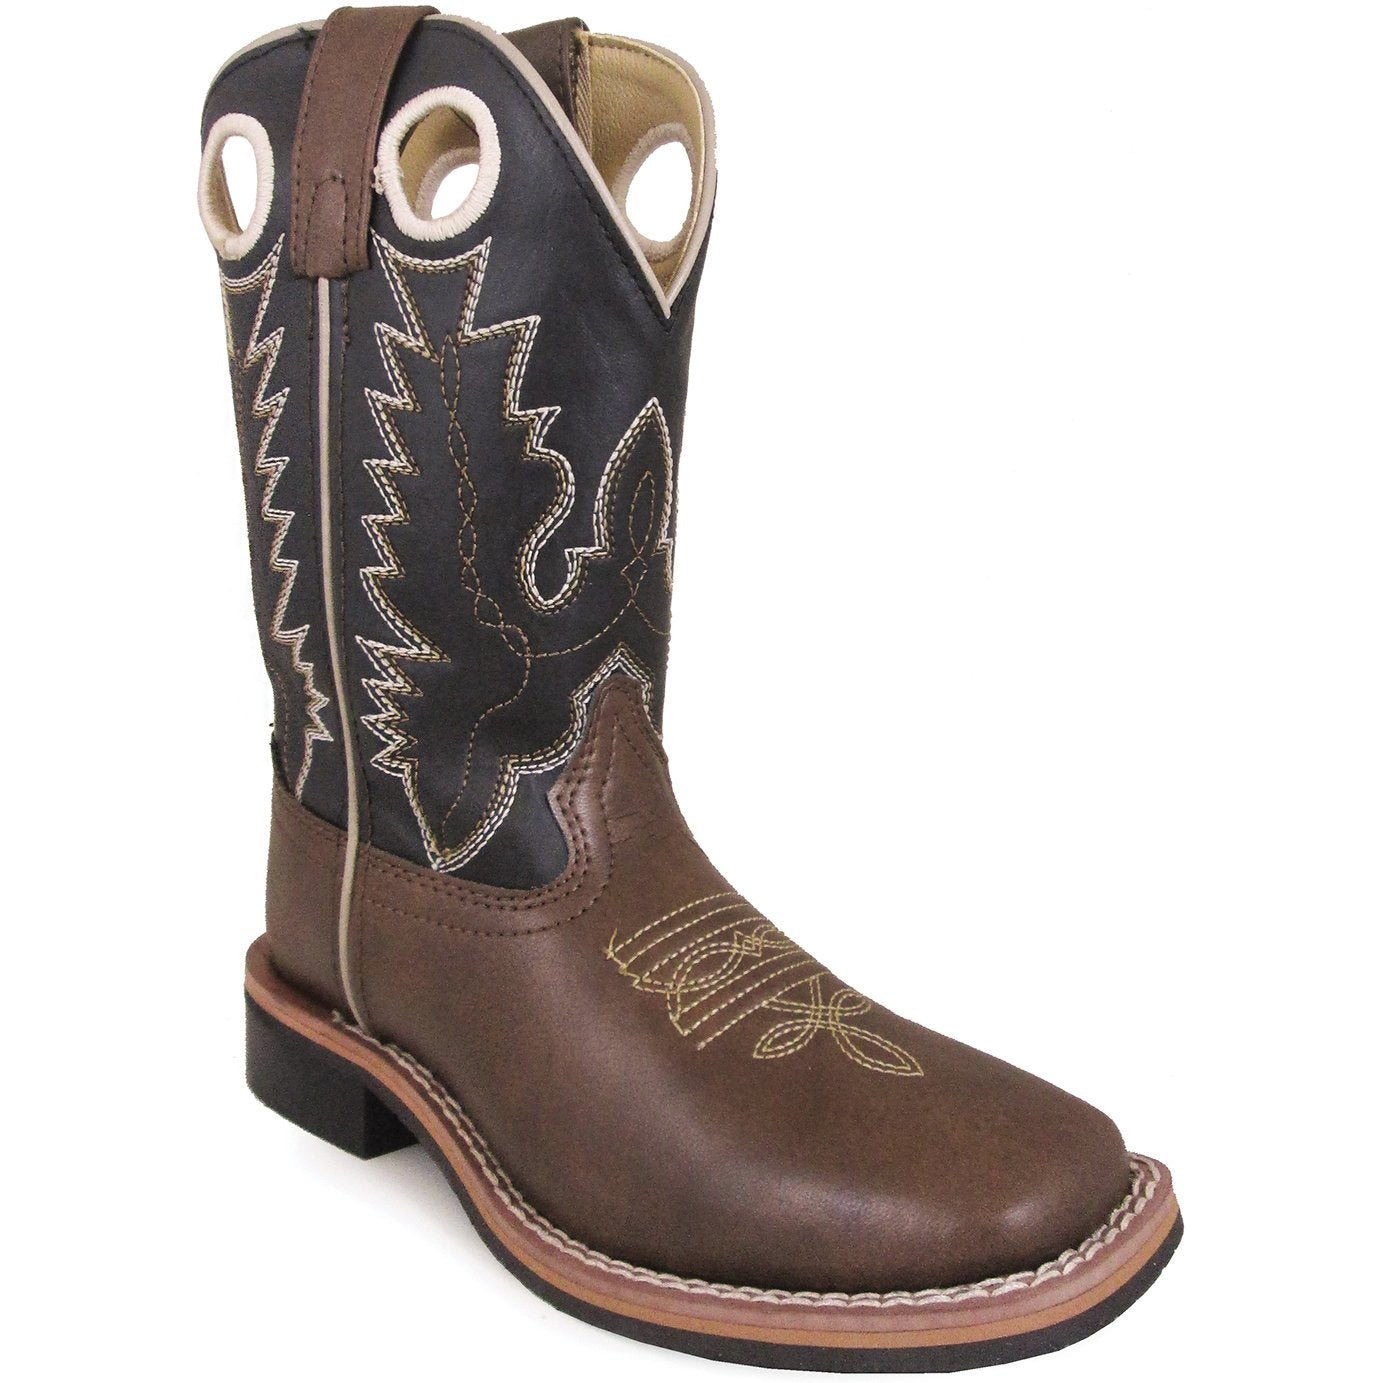 Smoky Mountain Children's Blaze Brown/Black Cowboy Boot